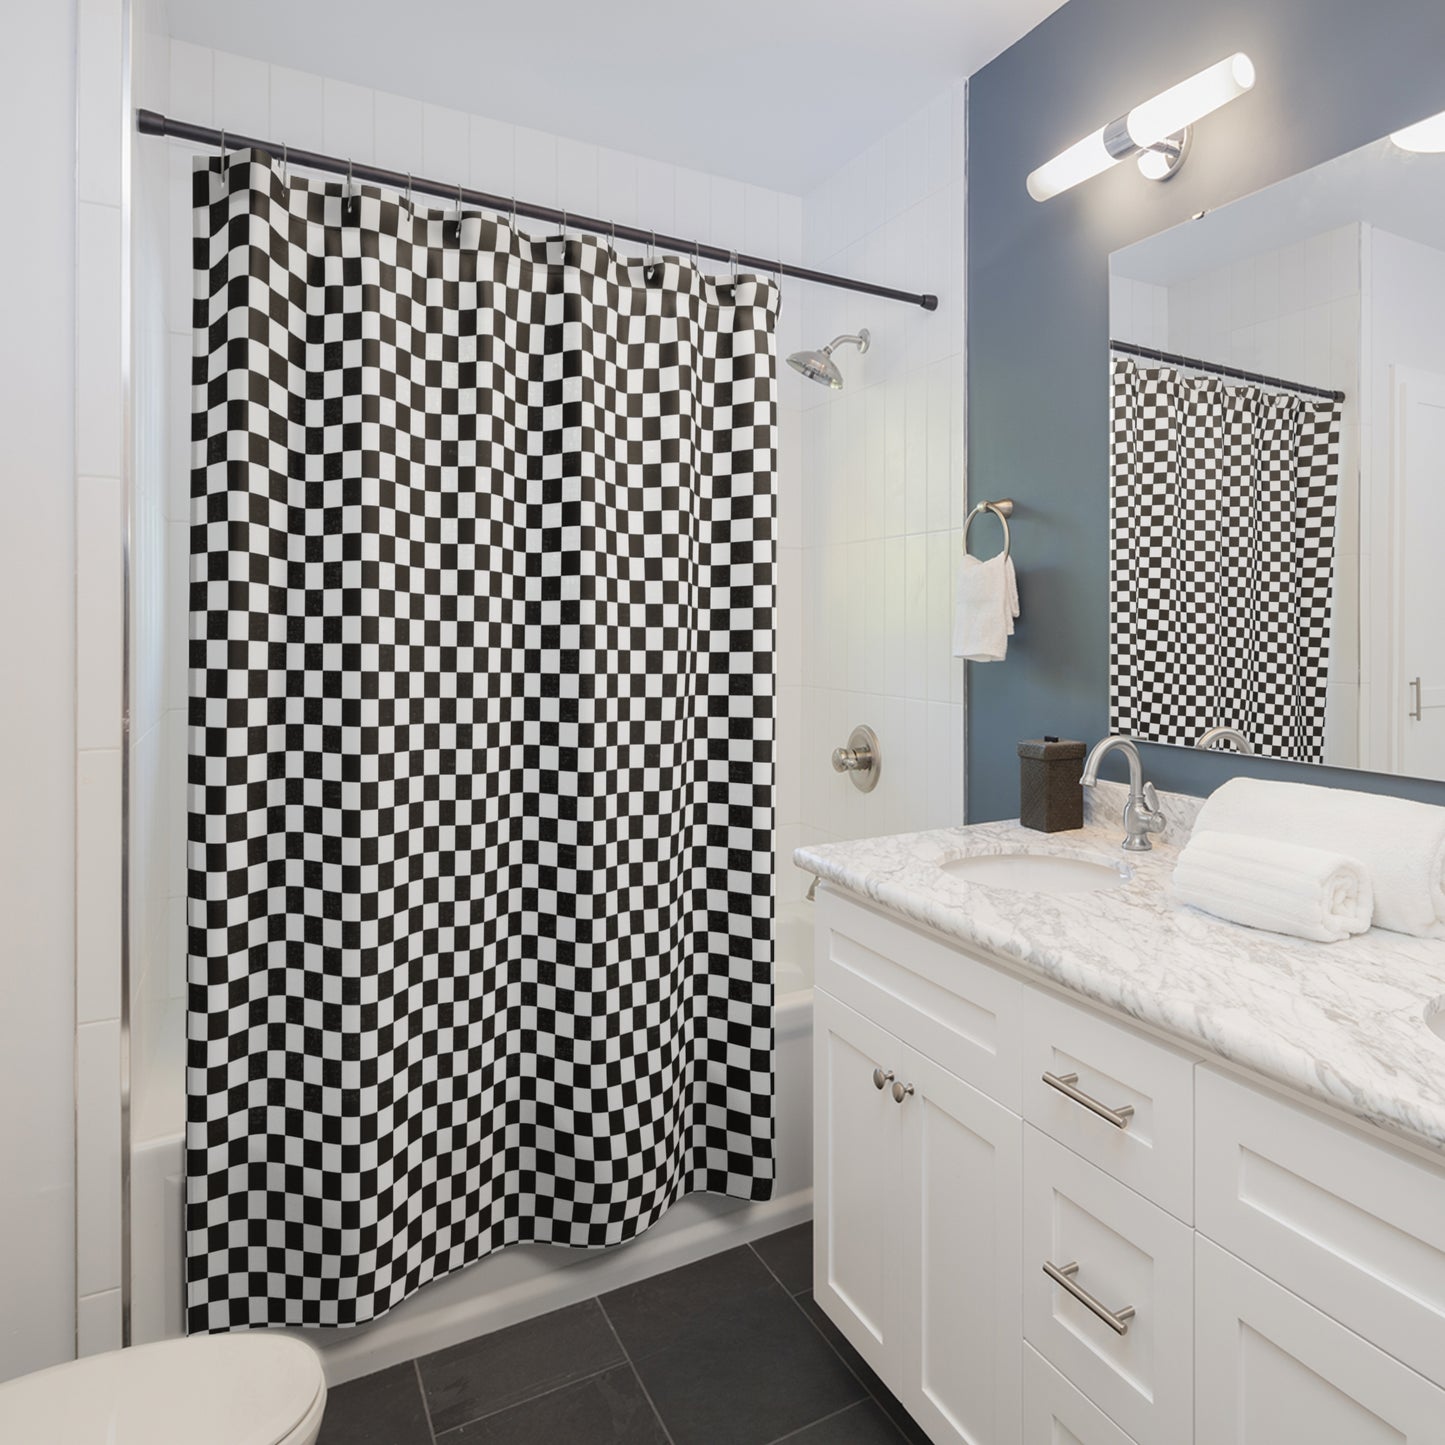 Checkered Shower Curtain, Black White Check Fabric Unique Bath Bathroom Decor Cool Unique Housewarming Home Gift 71" x 74"